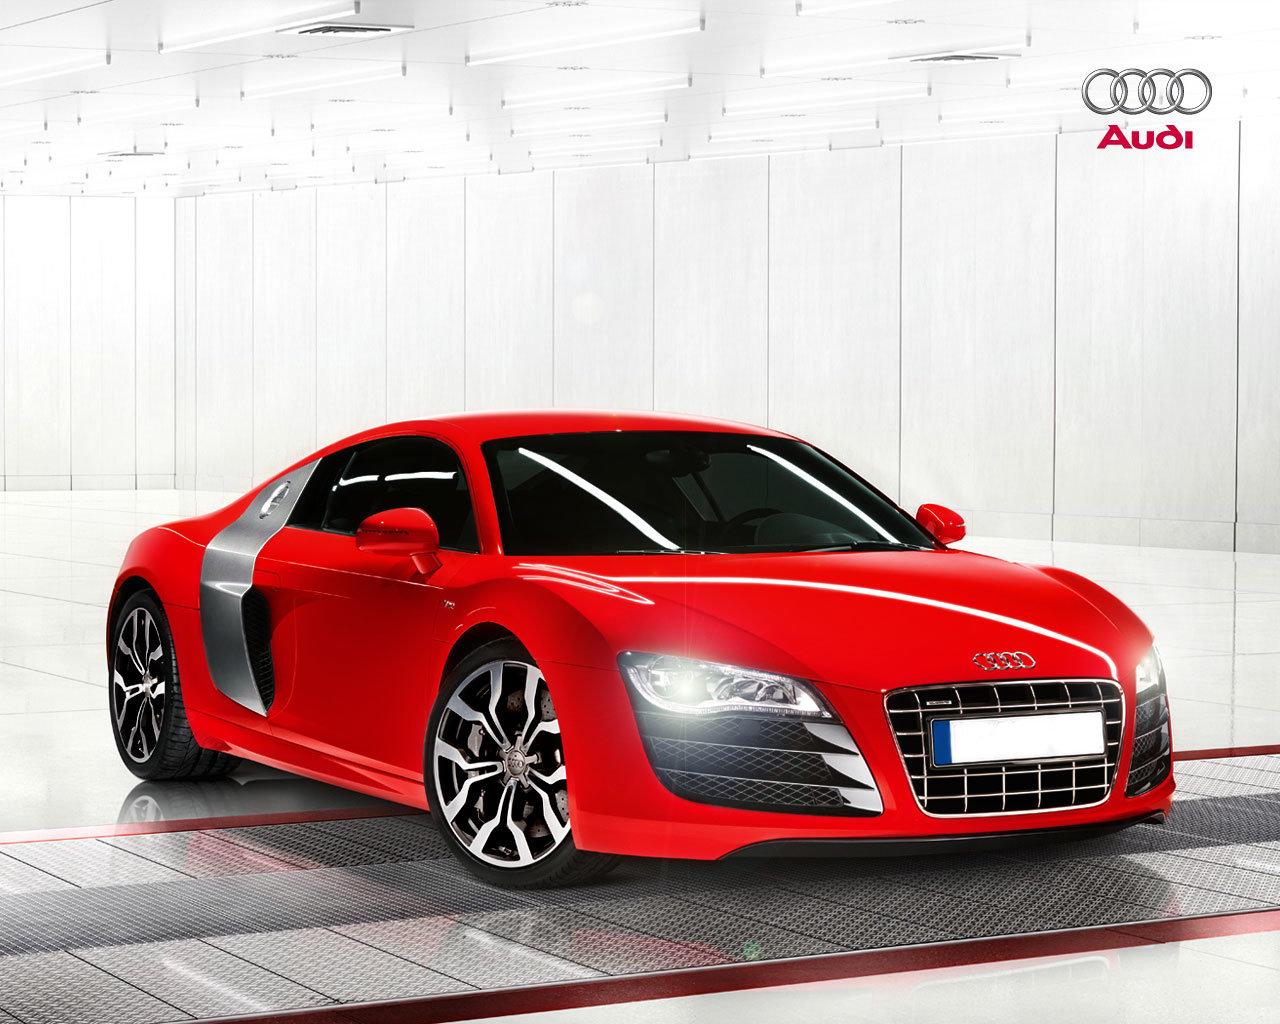 Best Audi R8 wallpaper ID:452769 for High Resolution hd 1280x1024 PC